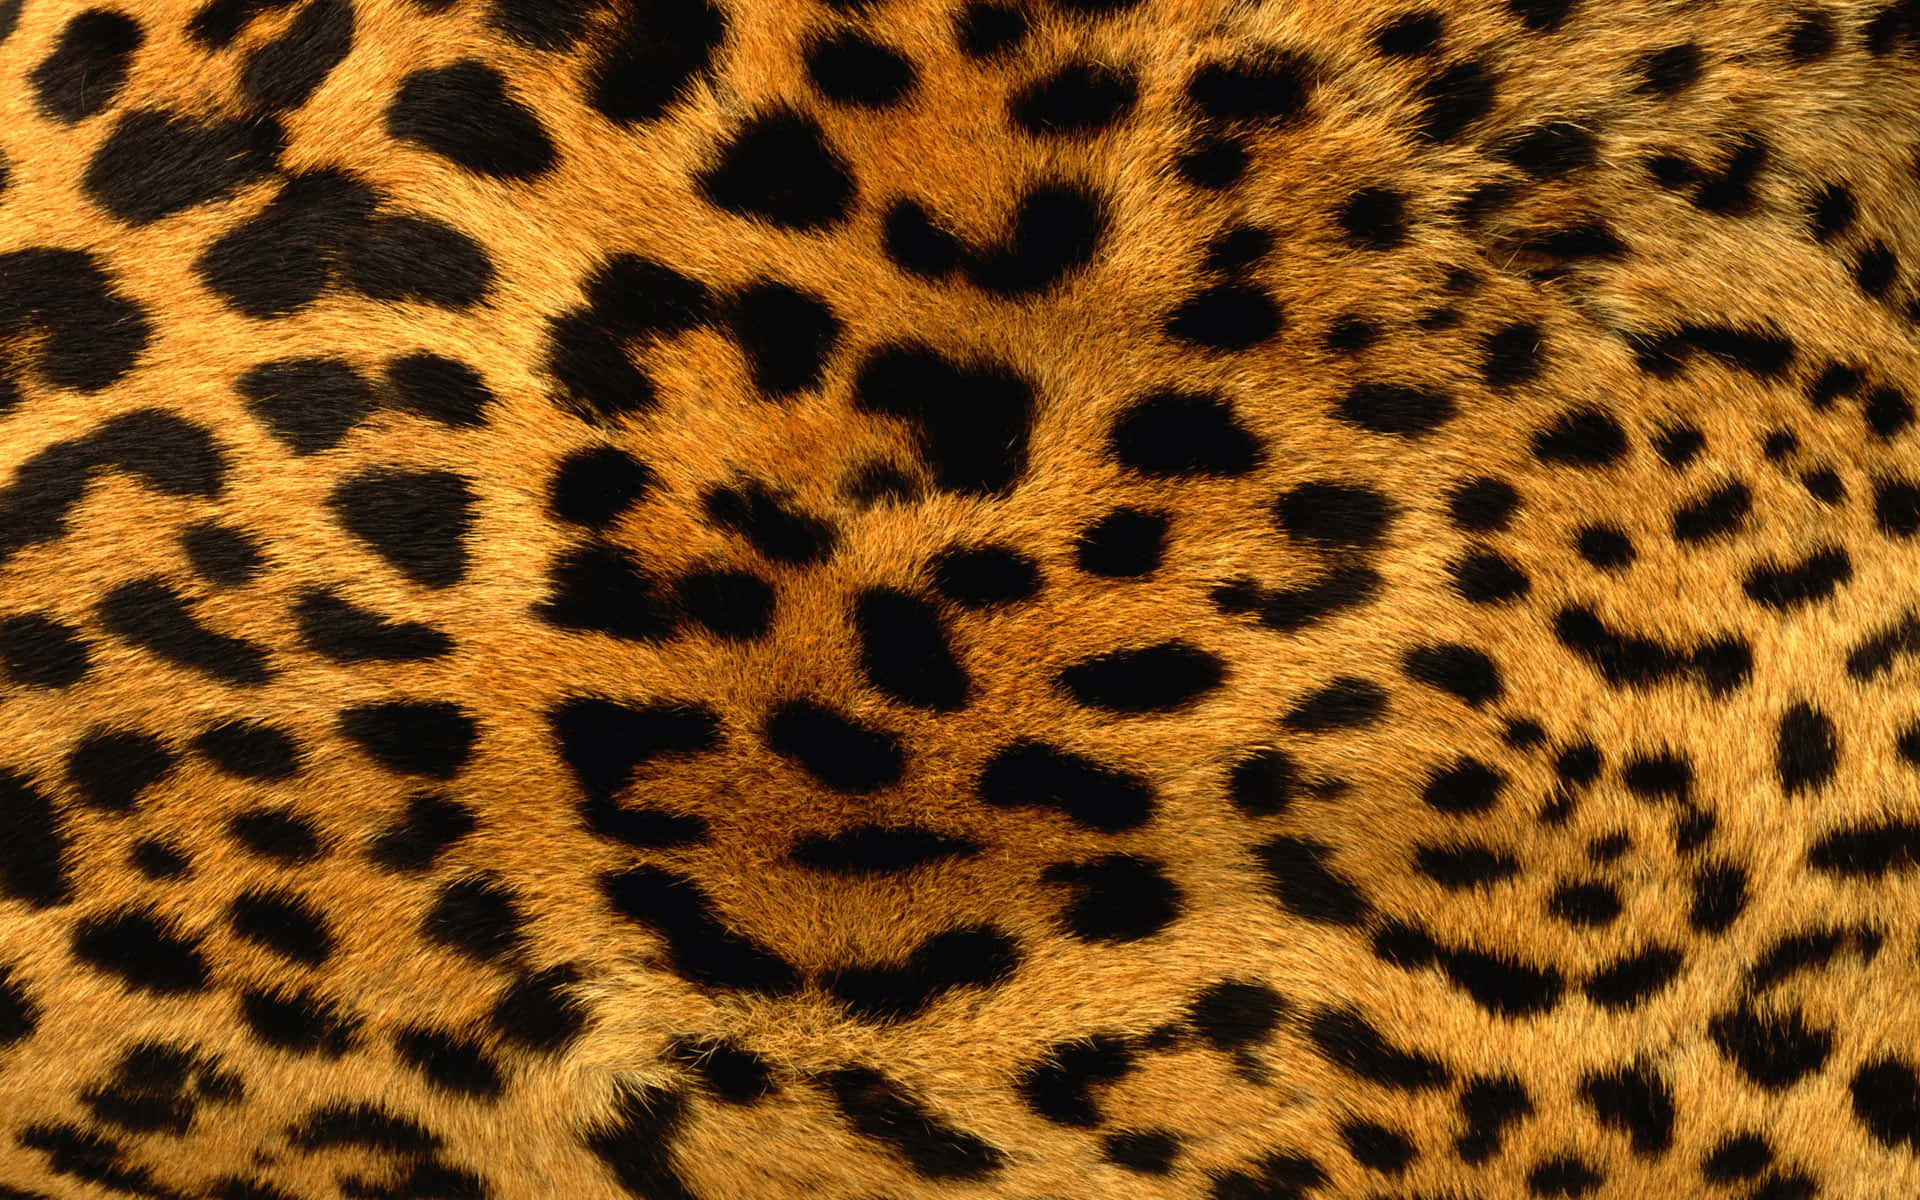 A fierce leopard stalking its prey in the dense jungle brush